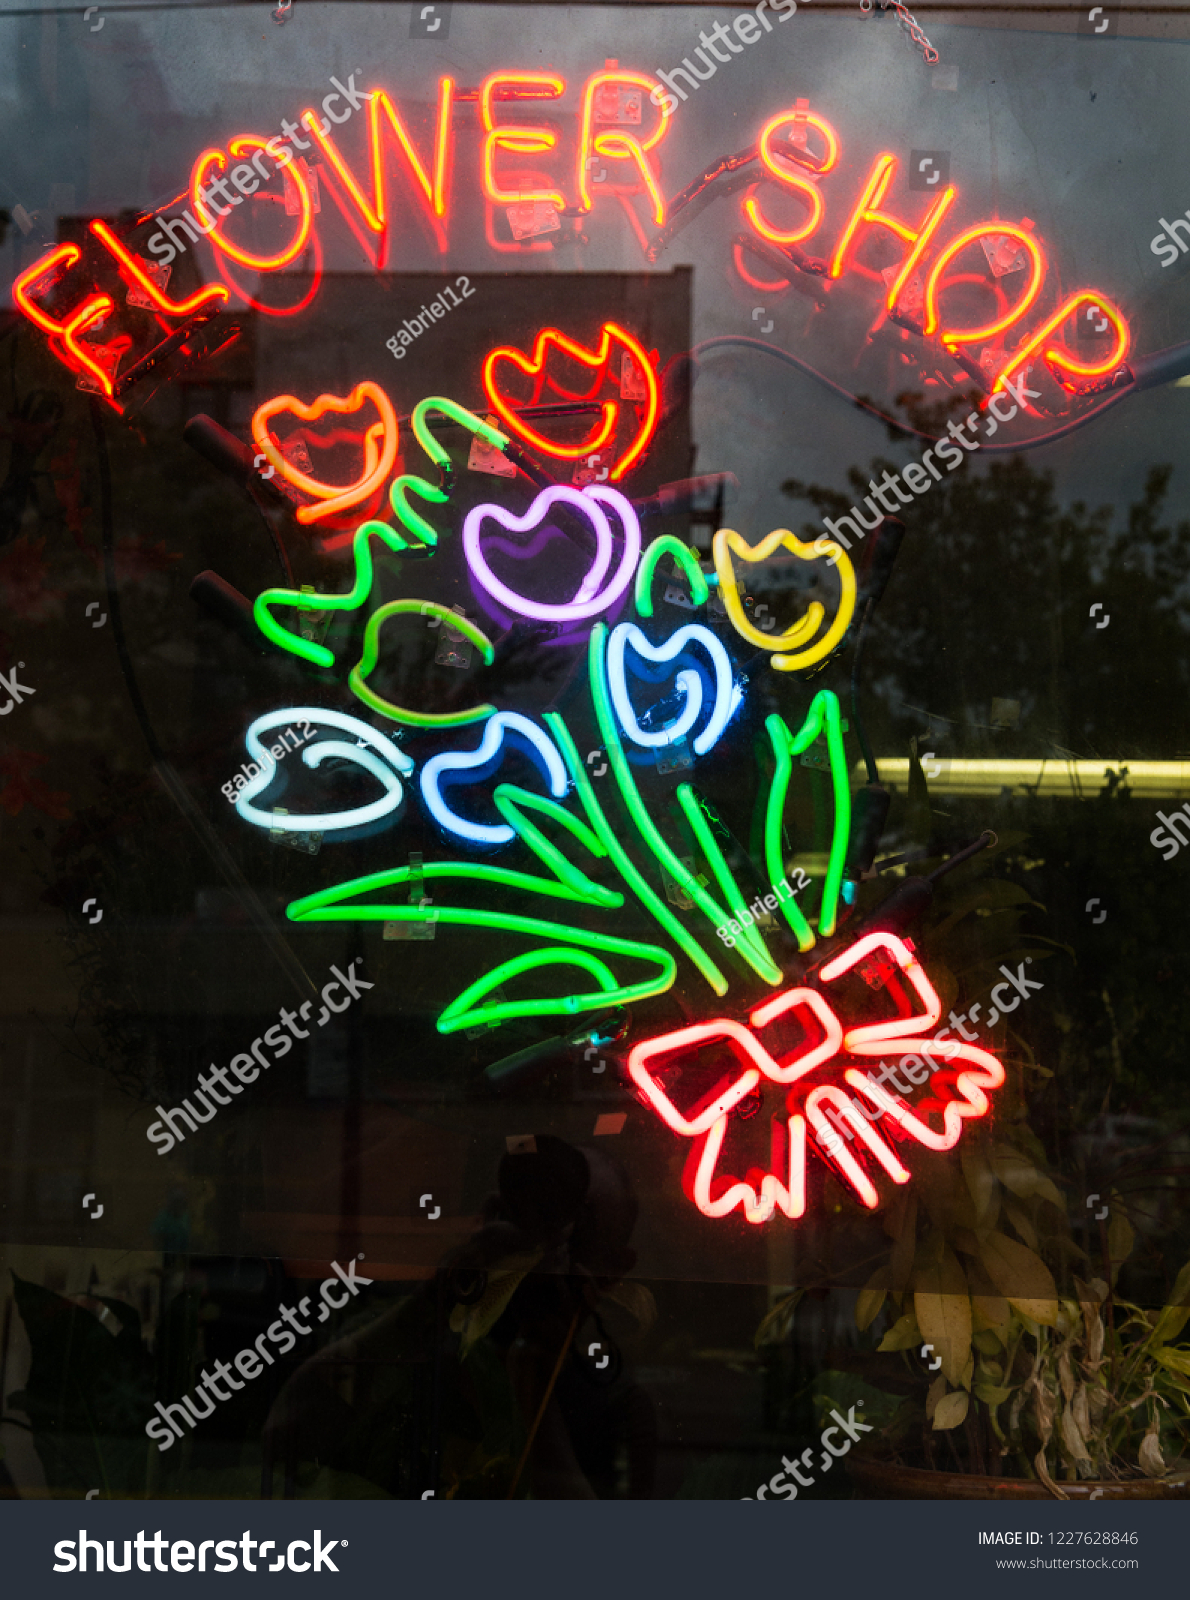 i133-b OPEN Florist Shop Flower Display Neon Light Sign 